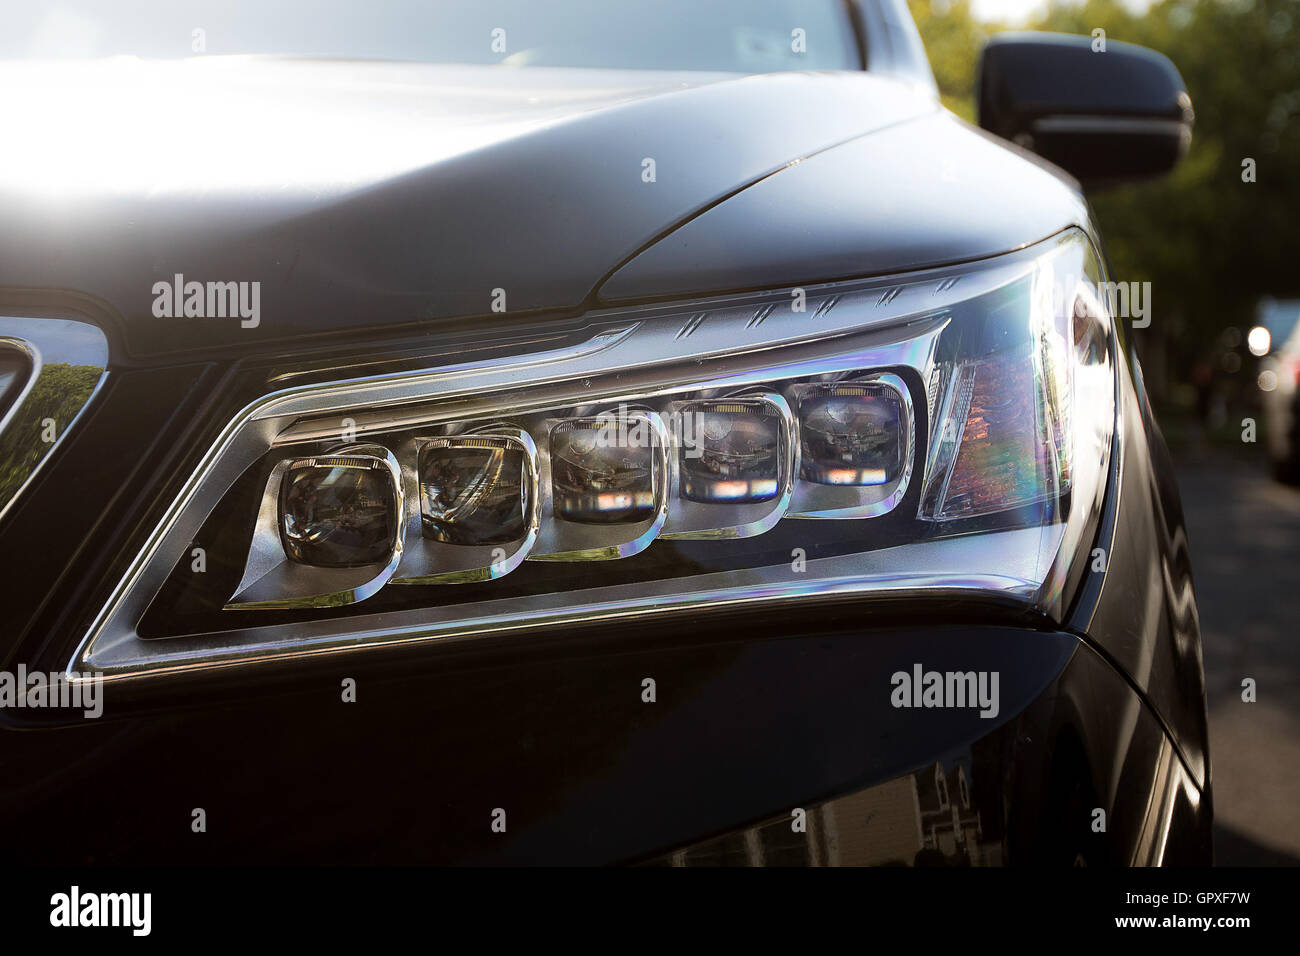 A closeup of a headlight of an SUV. Stock Photo